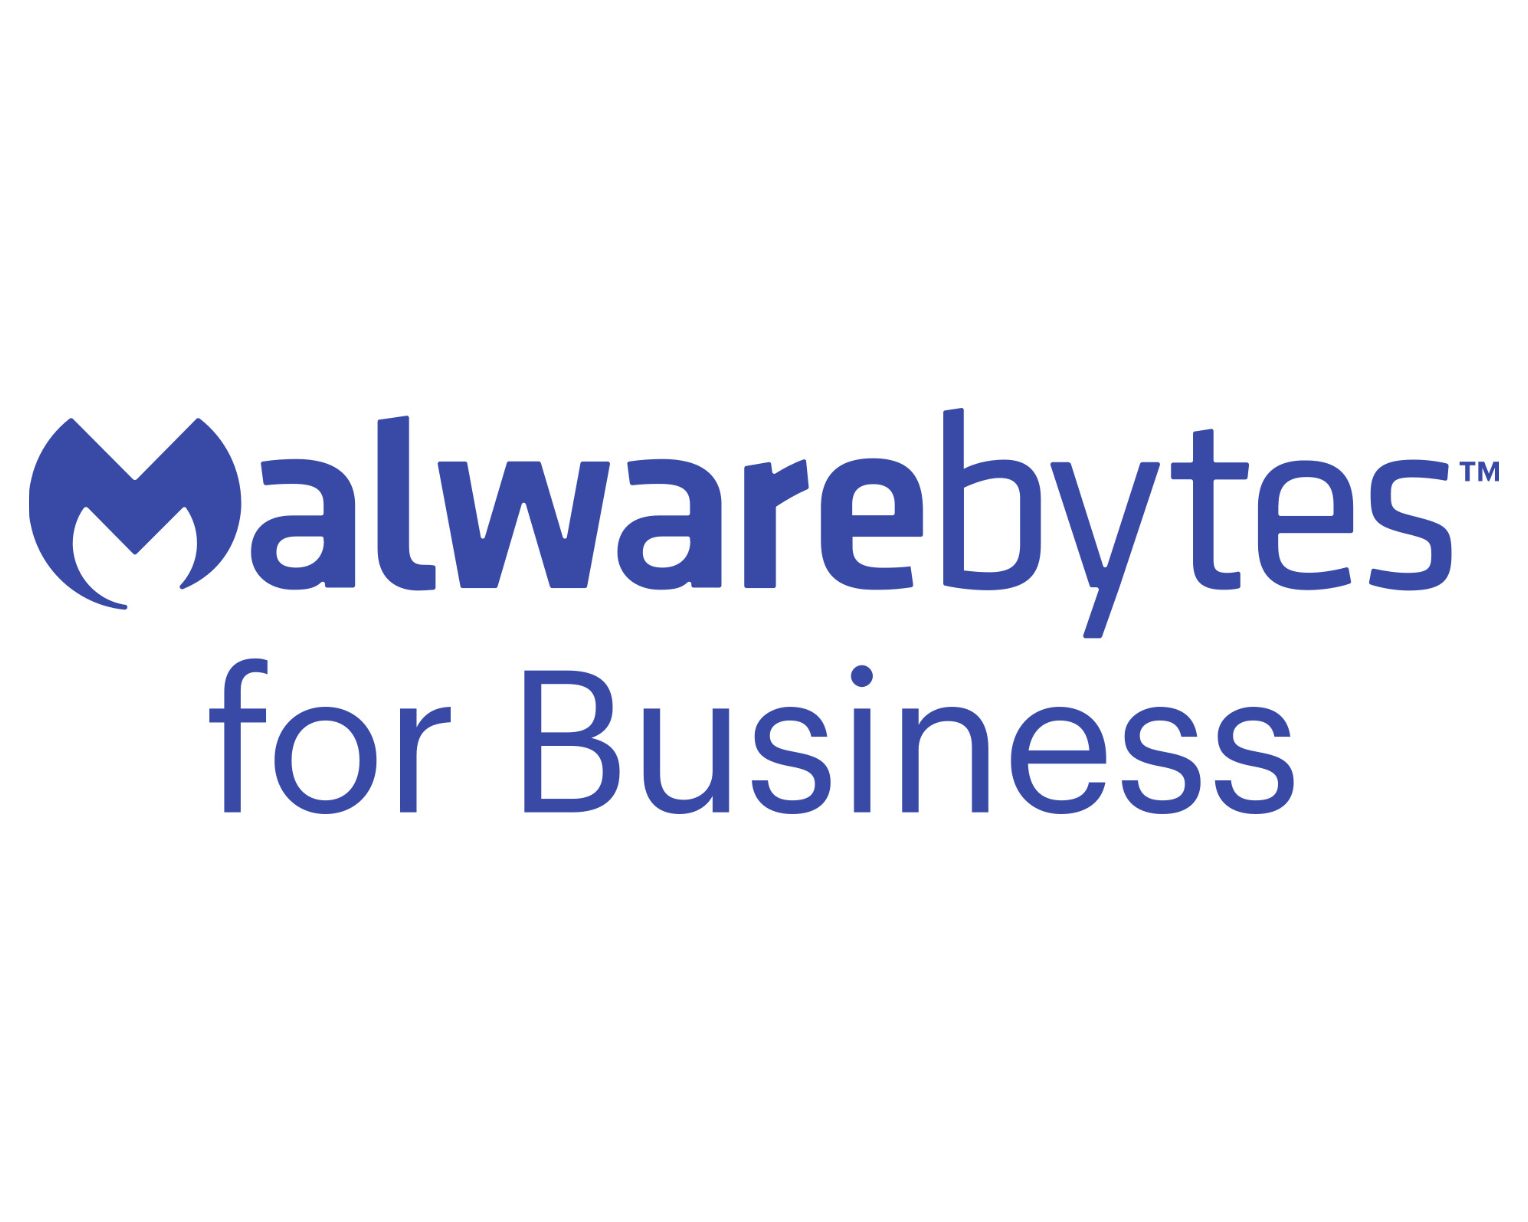 malwarebytes logo transparent